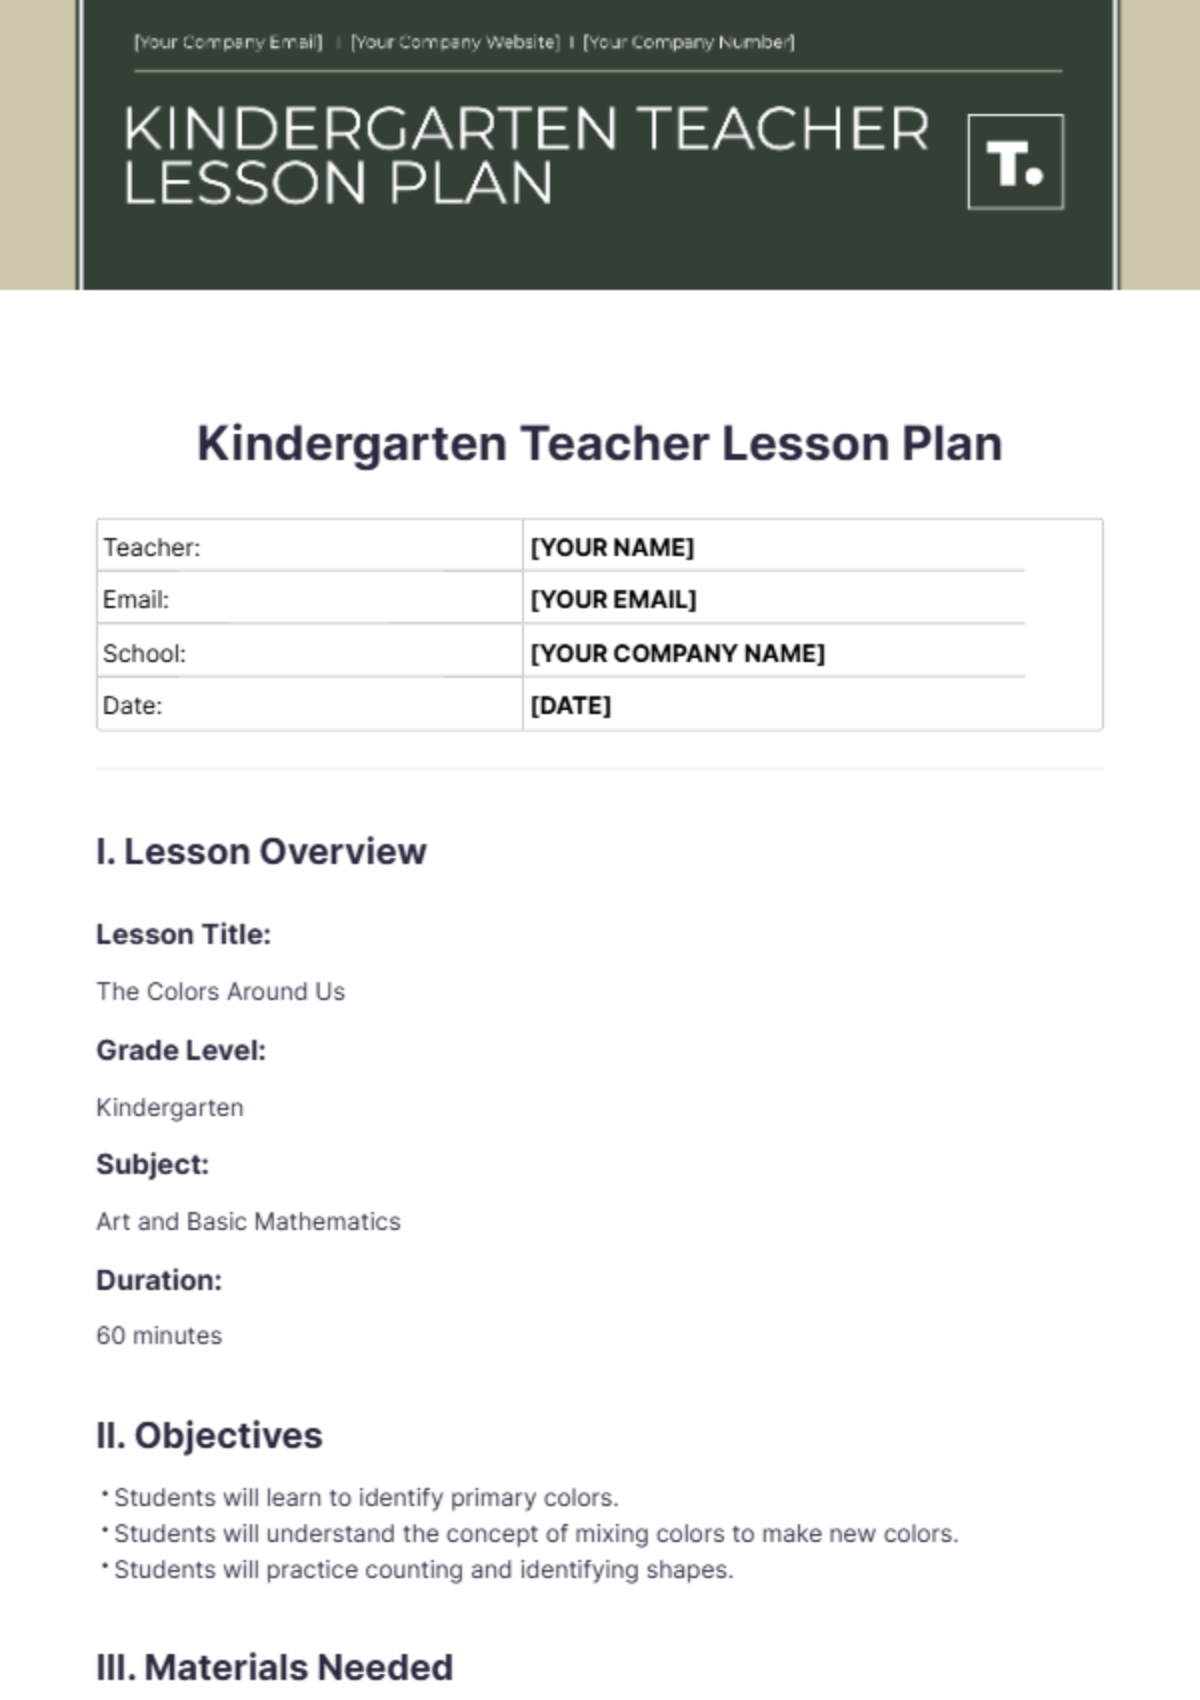 Free Kindergarten Teacher Lesson Plan Template